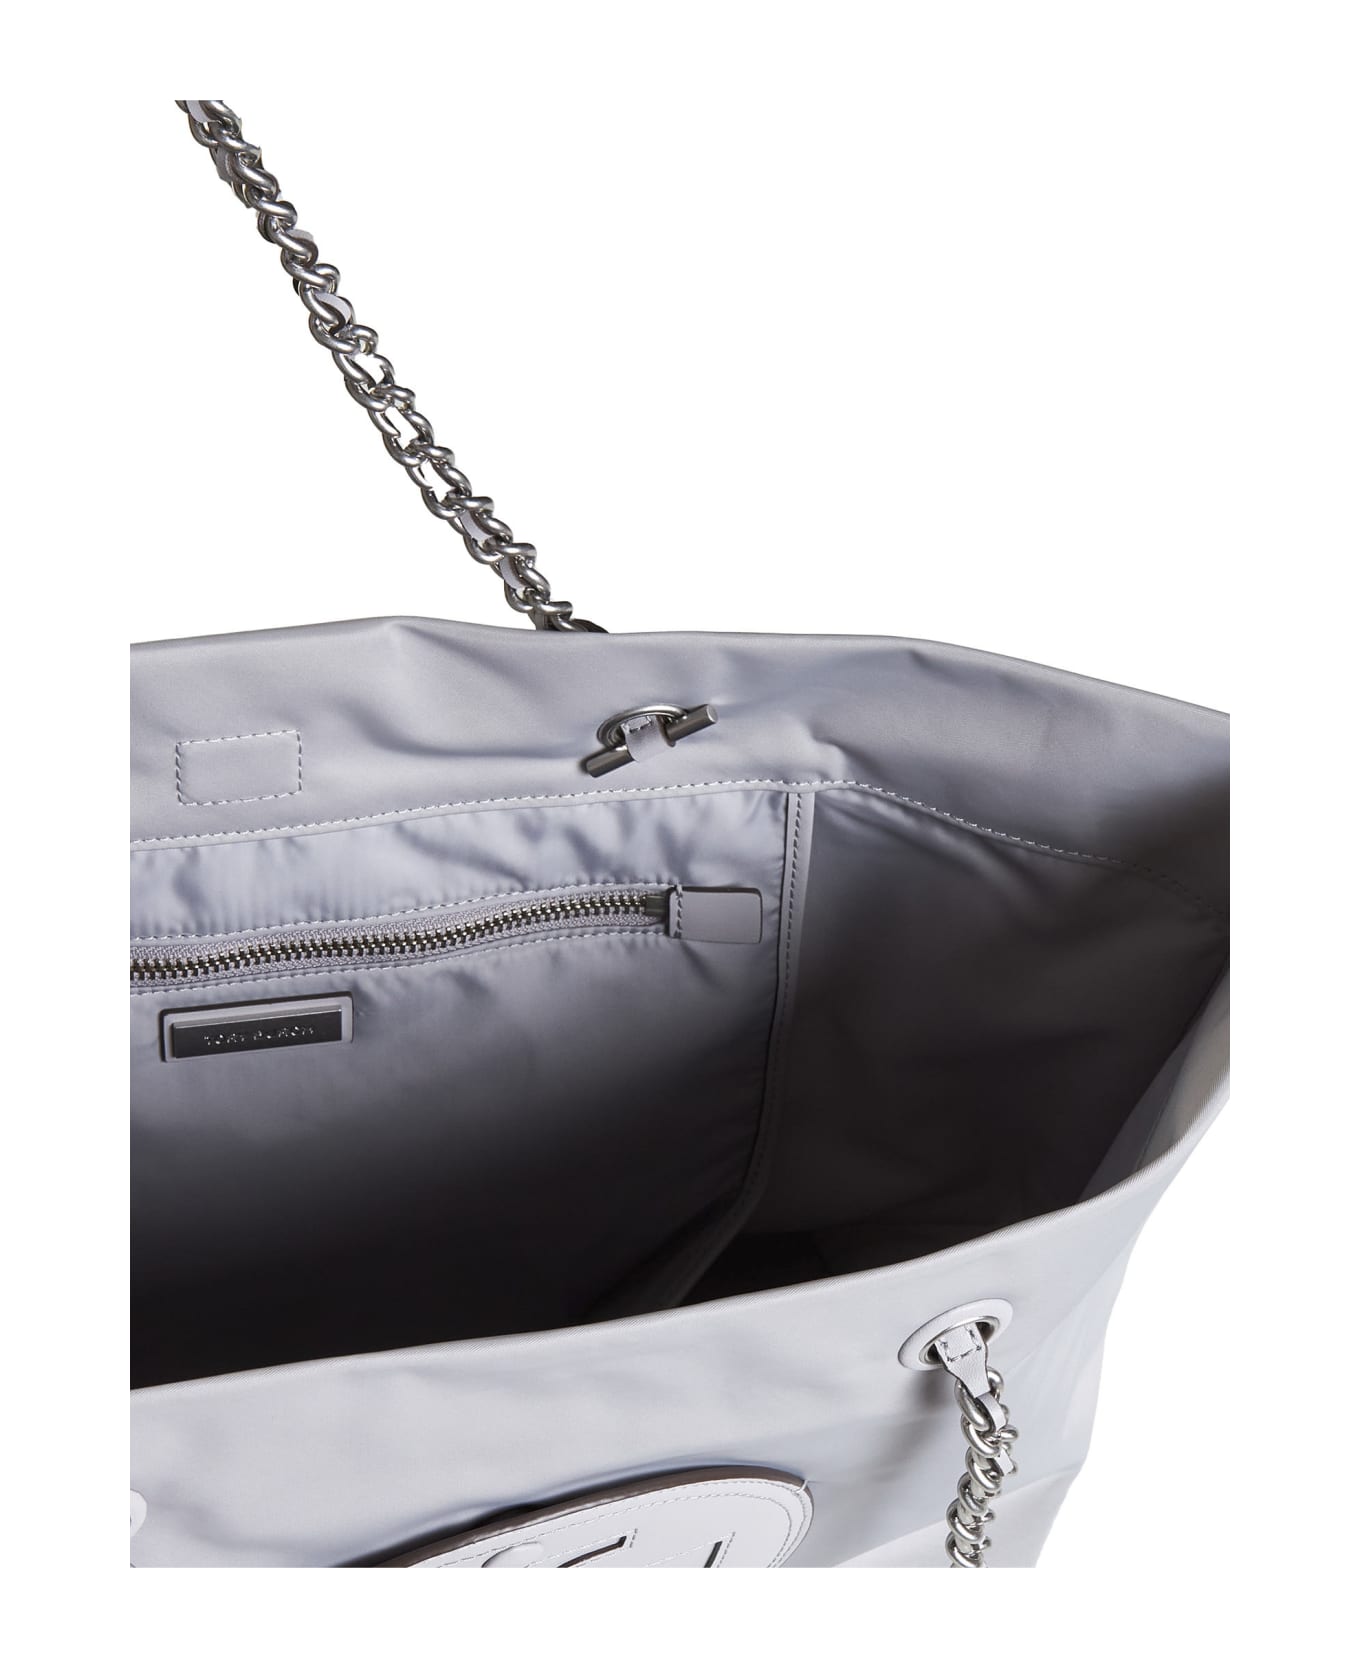 Tory Burch Ella Chain Shopping Bag - Grey